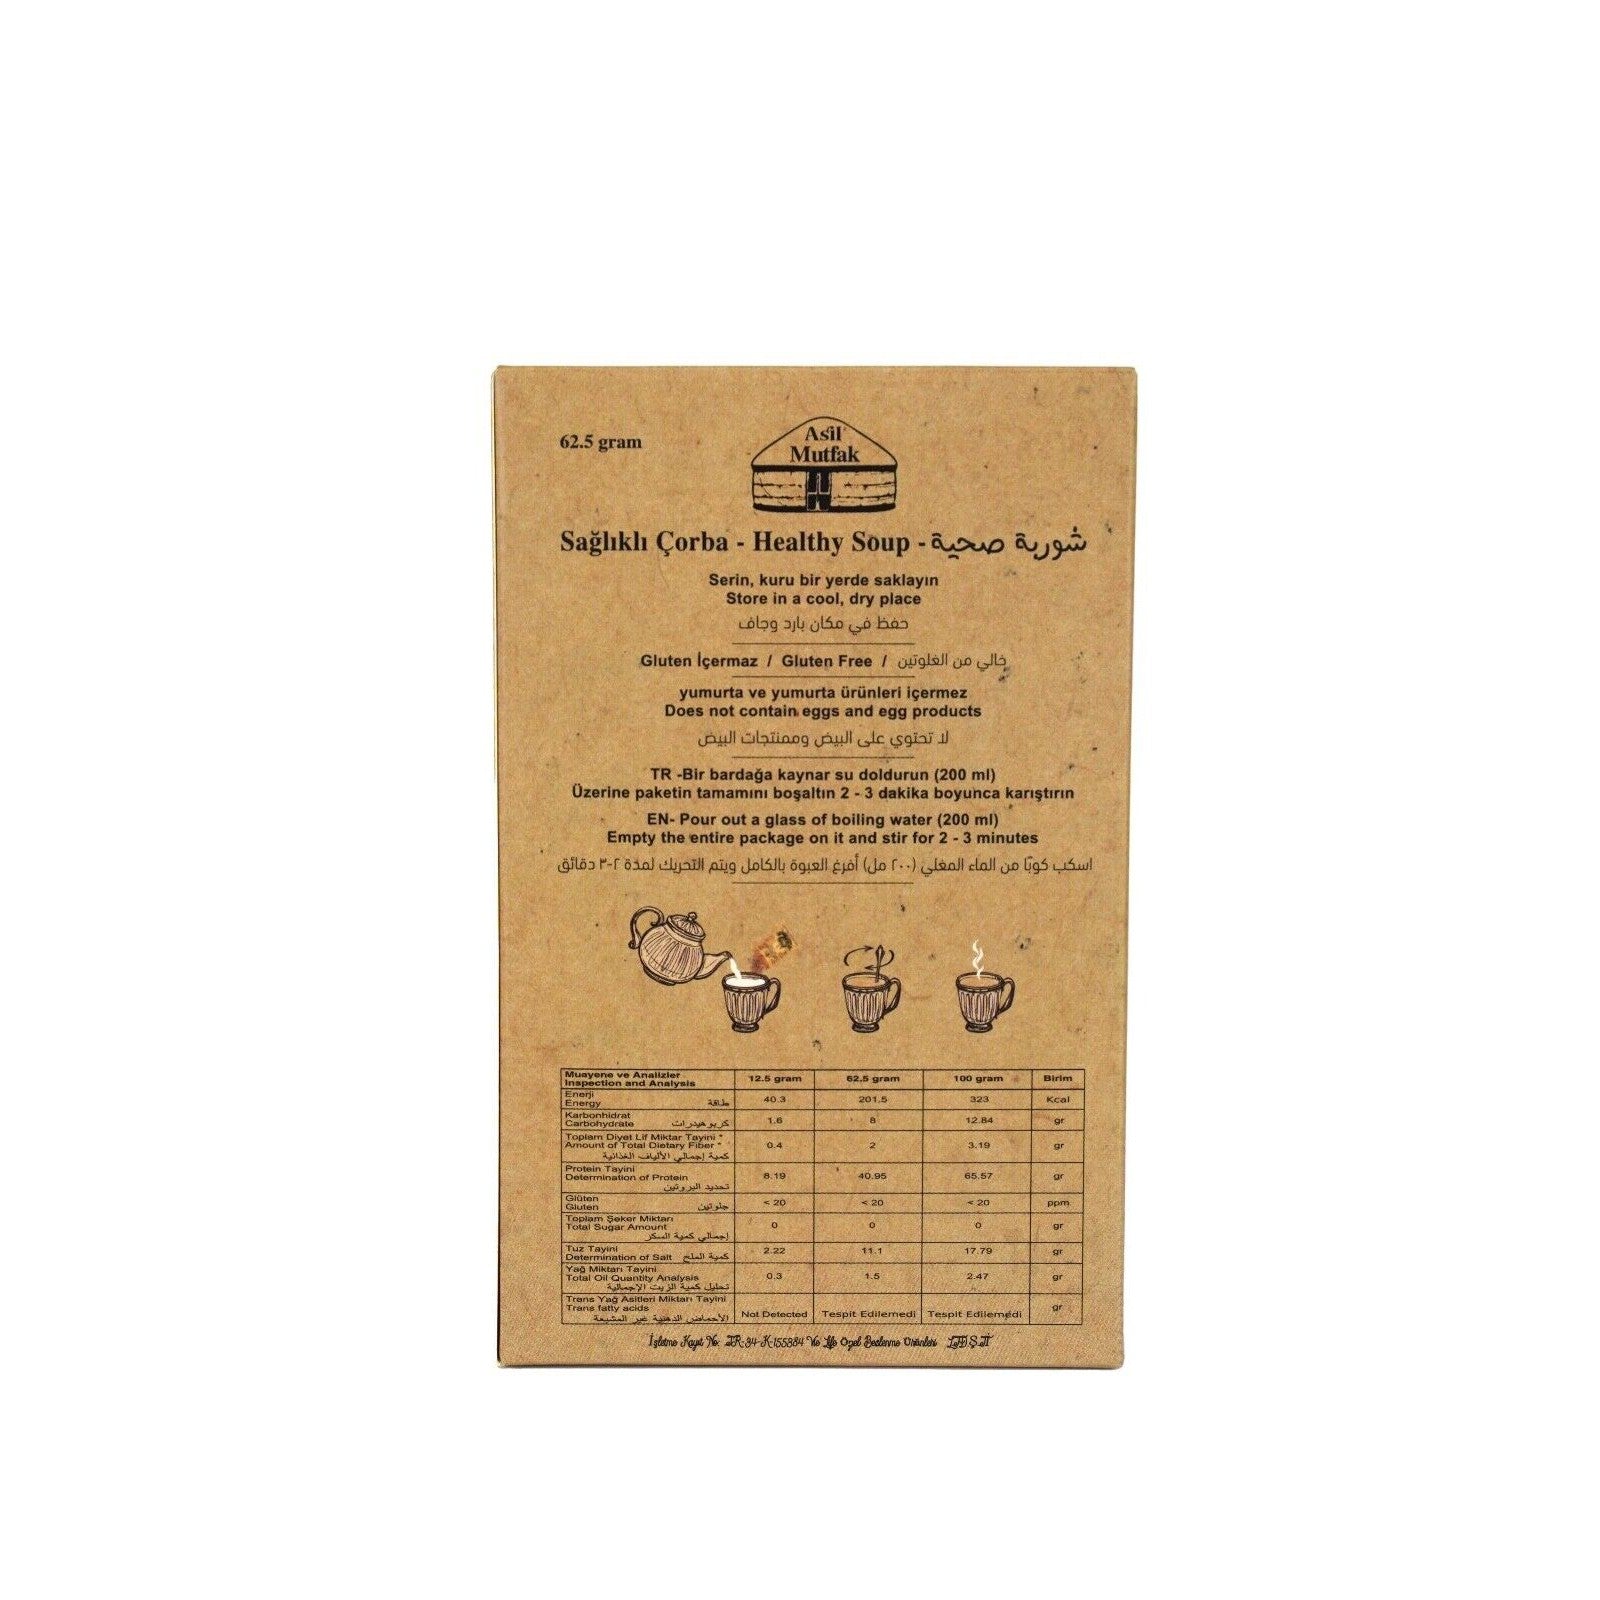 Asil Mutfak Bone Broth Soup Mint 100% Natural Collagen Halal Certified Gluten Free Keto Low Carb 5 Packets